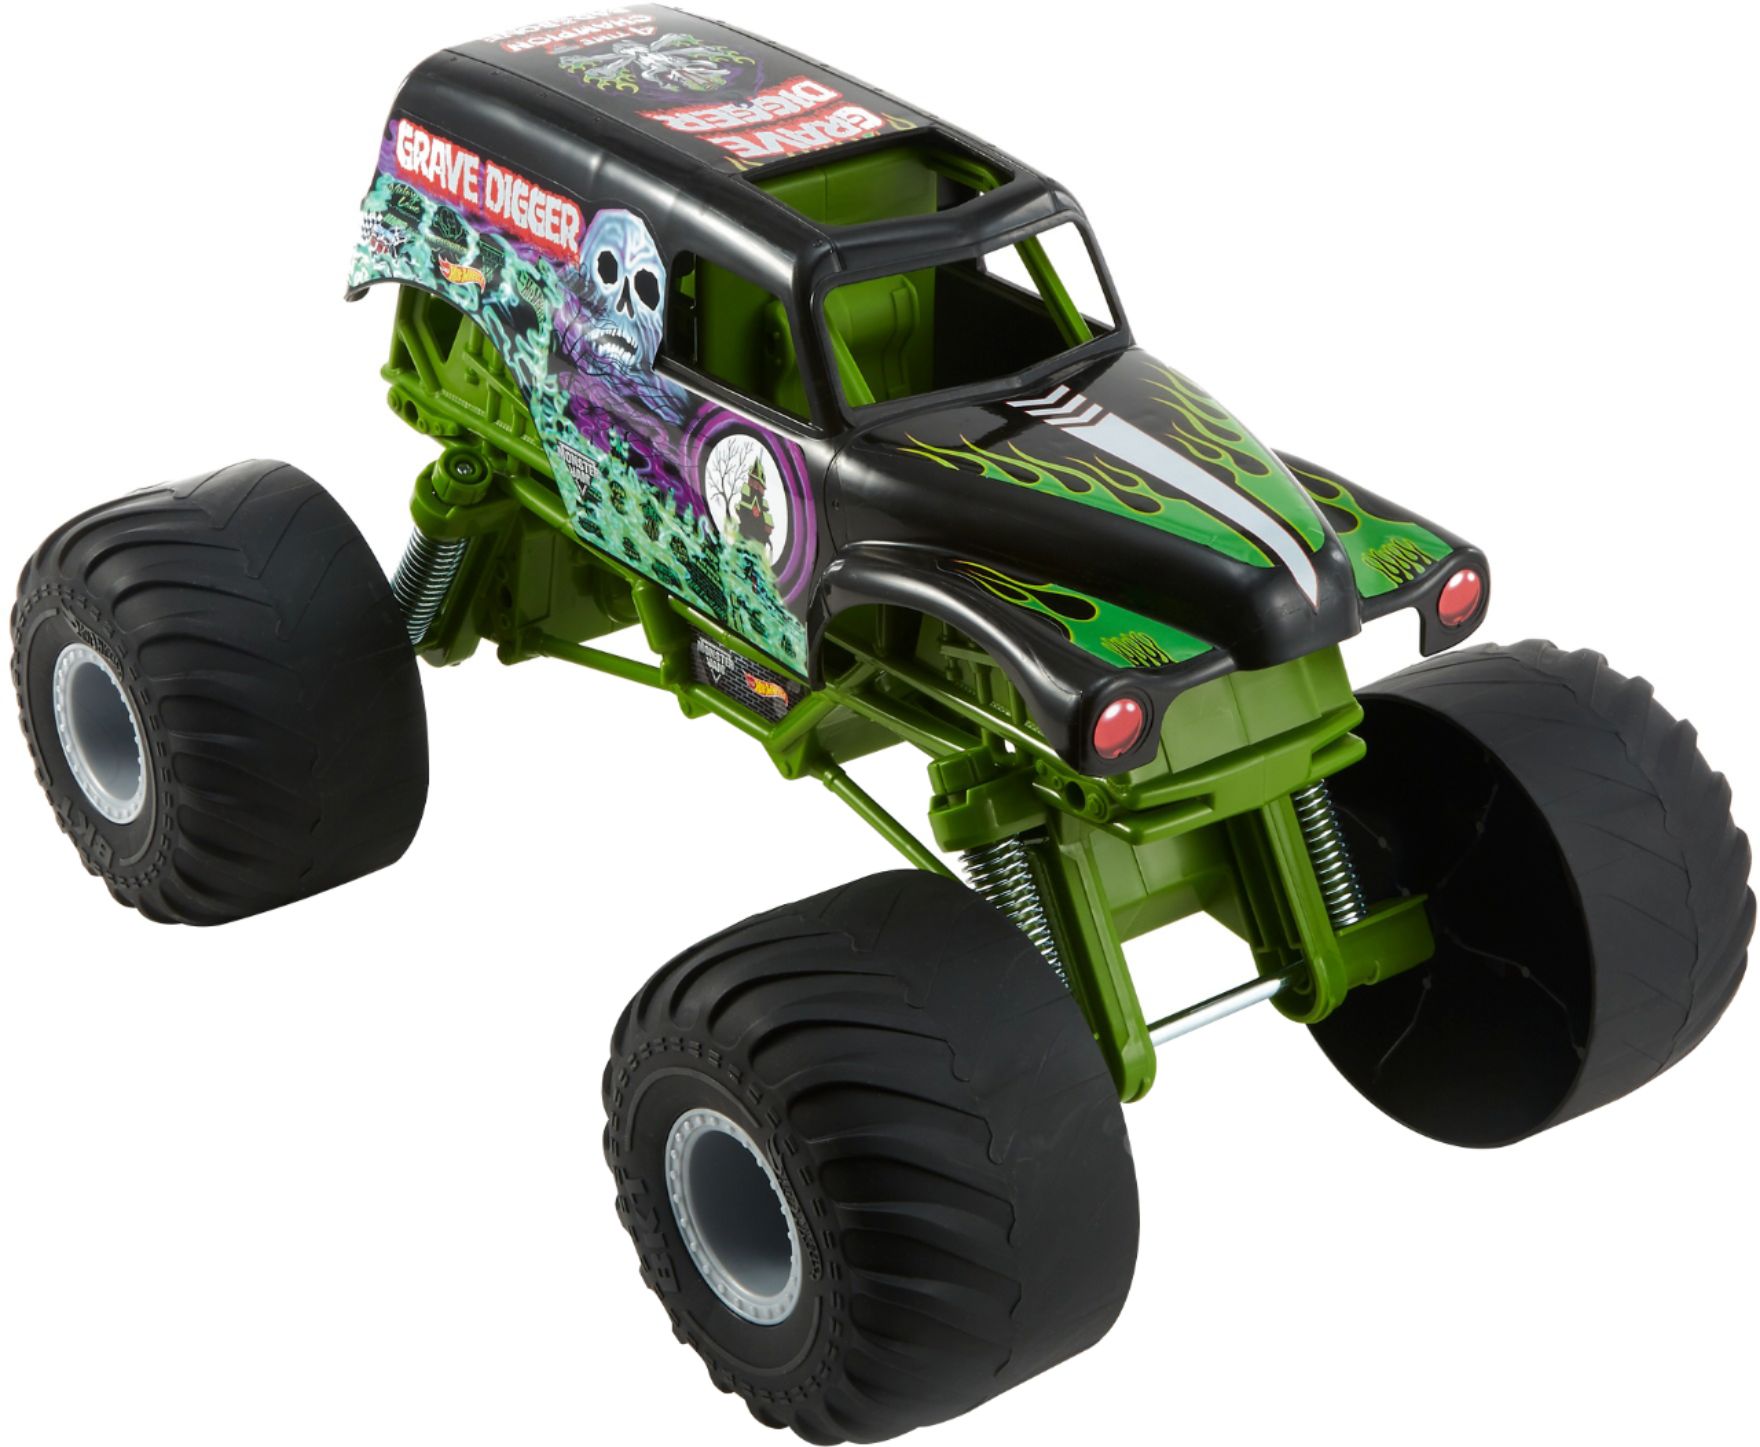 giant monster truck toy